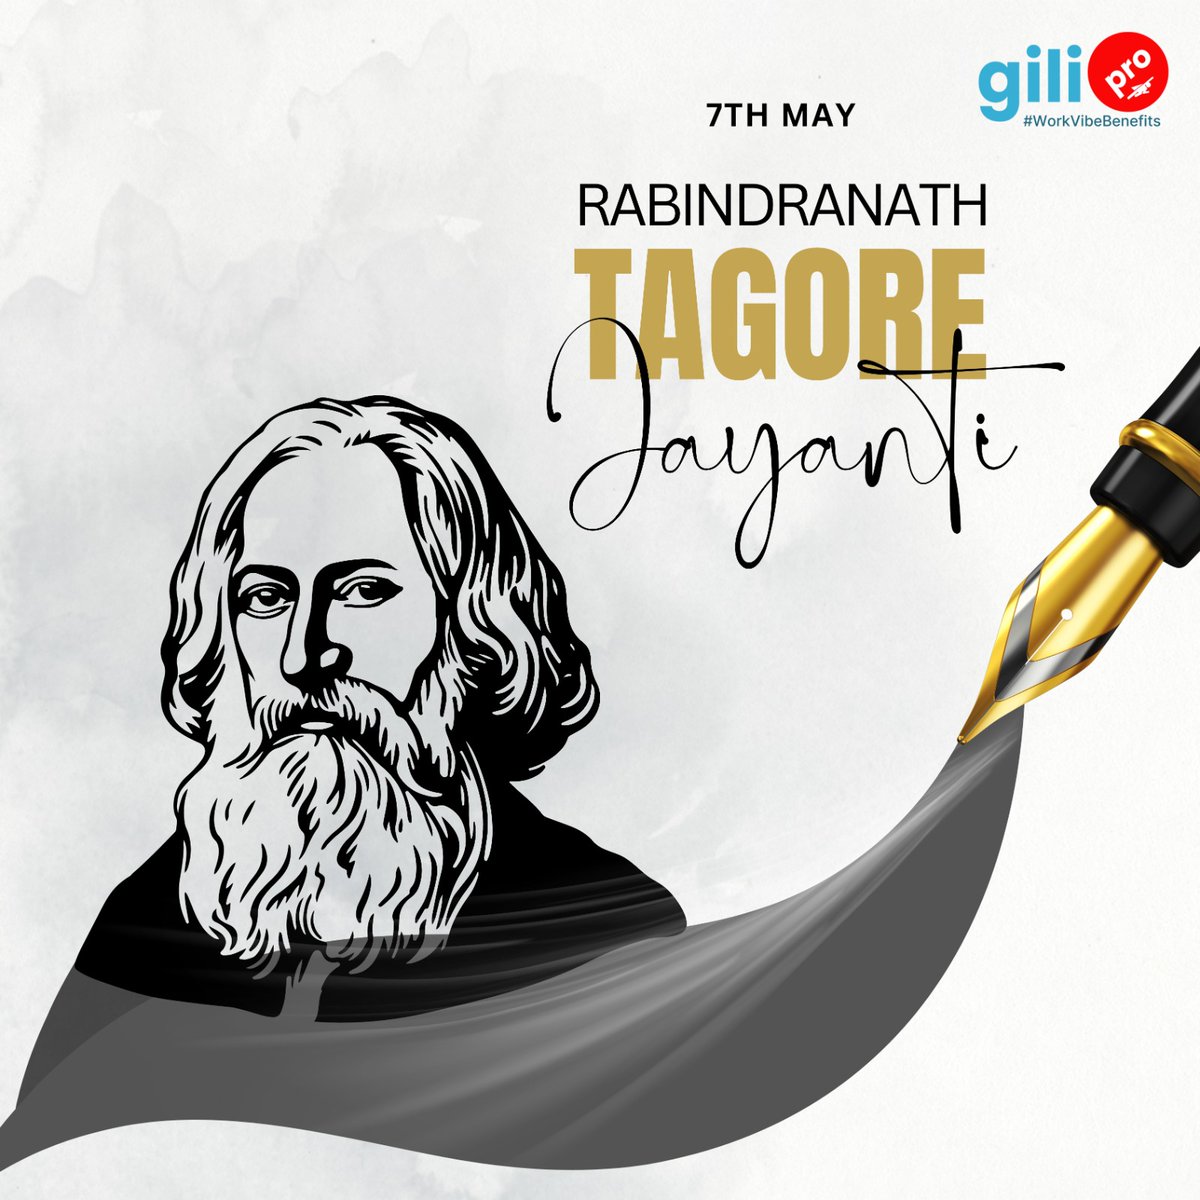 Celebrating the birth of a visionary poet, philosopher, and Nobel laureate. Happy Ravindranath Tagore Jayanti! 🌟

#gilipro #rabindranathtagore #rabindranathtagorejayanti #birthanniversary #poet #philosopher #nobellaureate #workvibebenefits